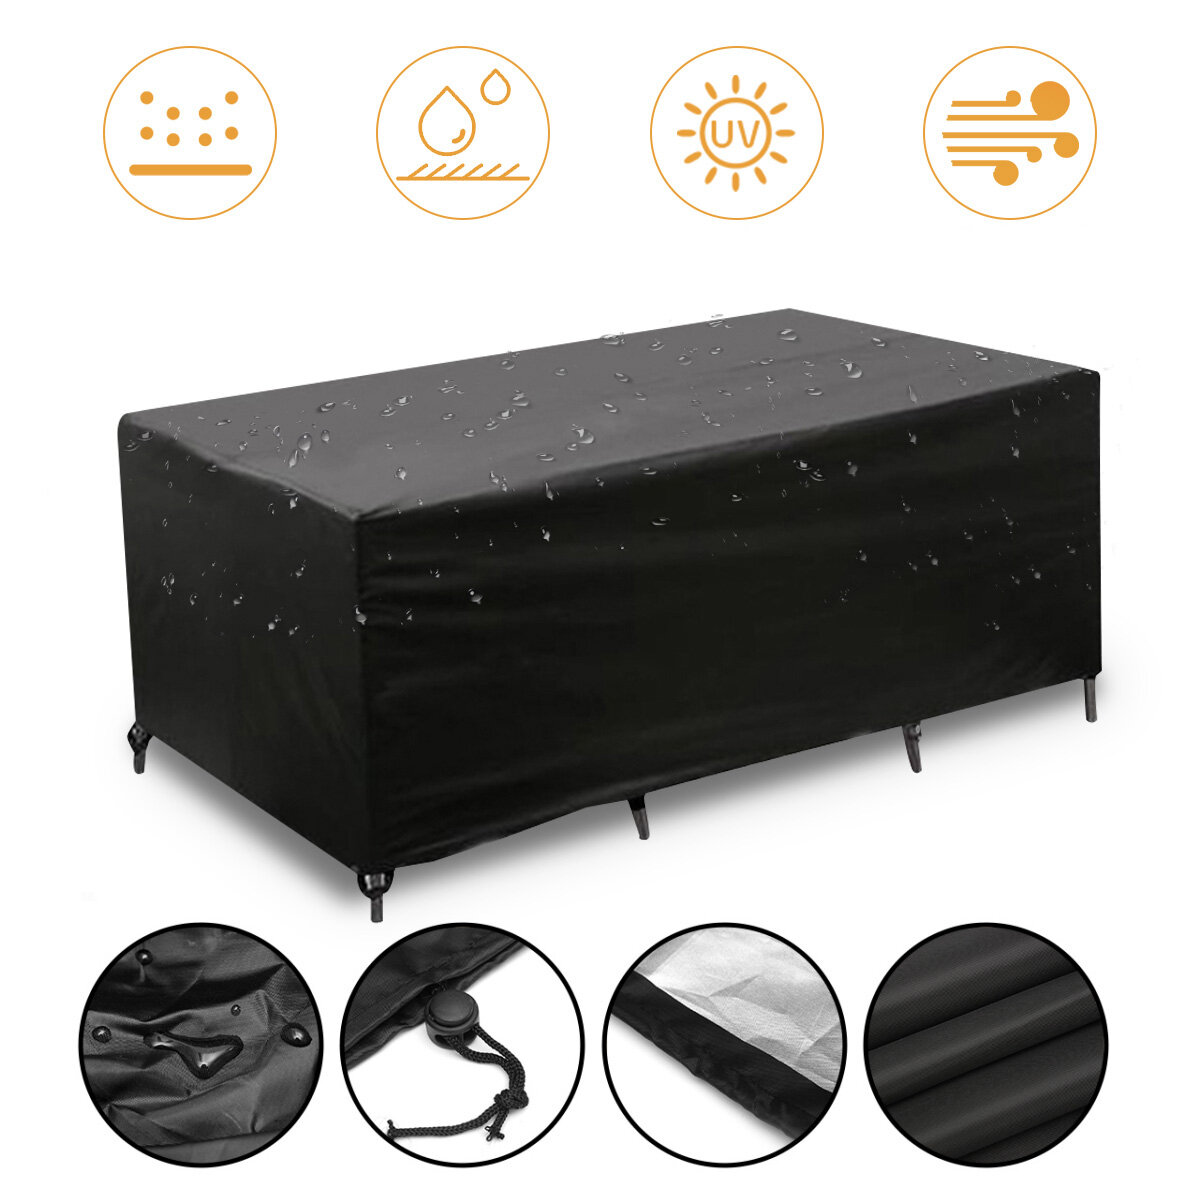 123x61x72cm Garden Furniture Covers 600D Heavy Duty Polyester Fabric Rattan Cover Waterproof Dustproof Anti-UV Sofa Seat